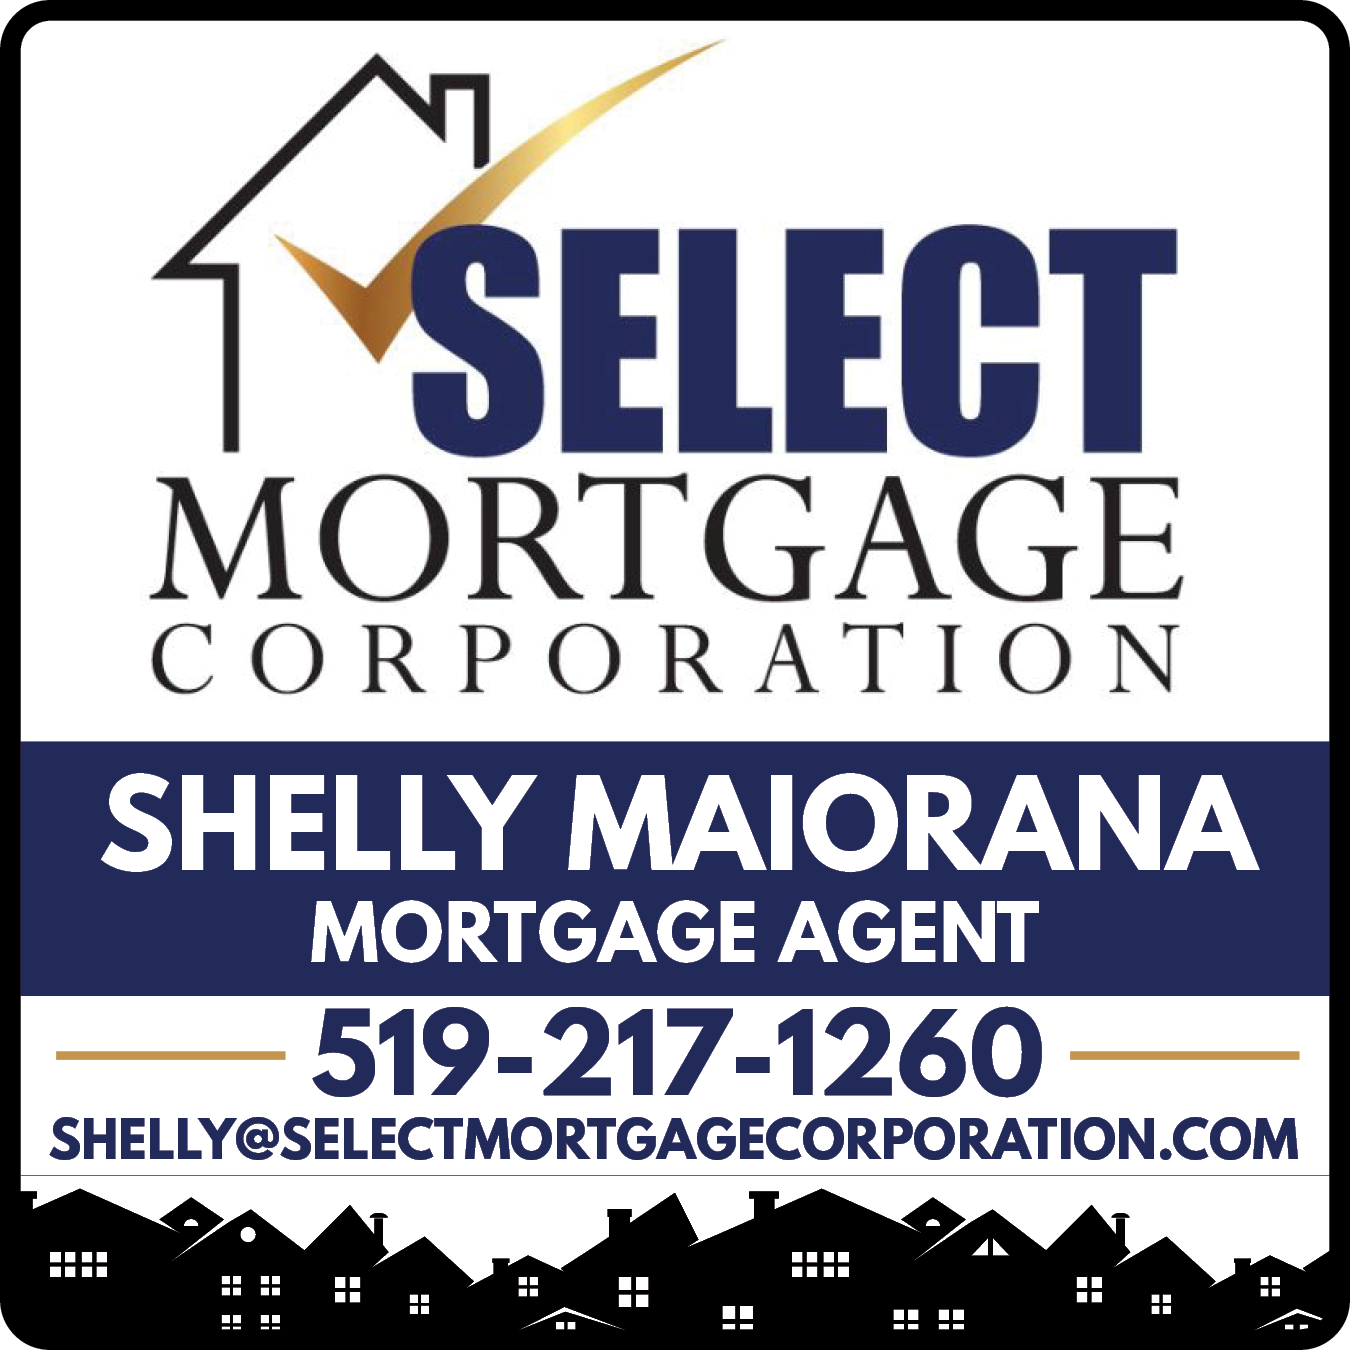 Select Mortgage Corp